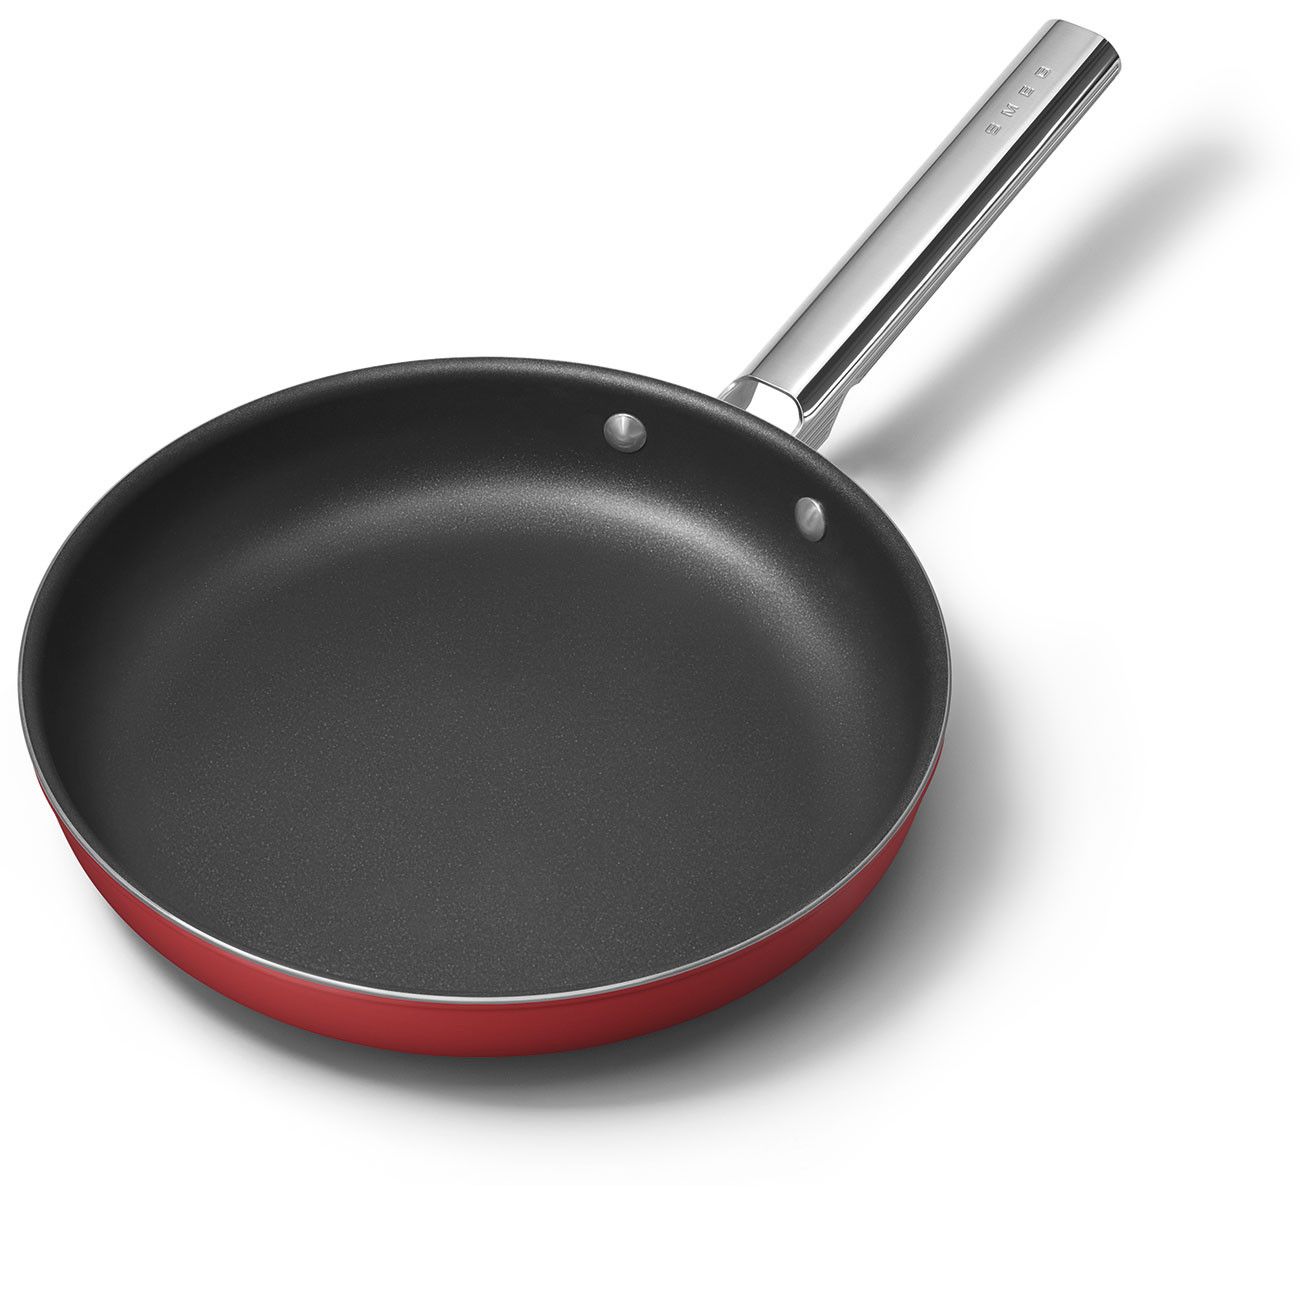 Set of 4 Smeg matte red non-stick frying pans